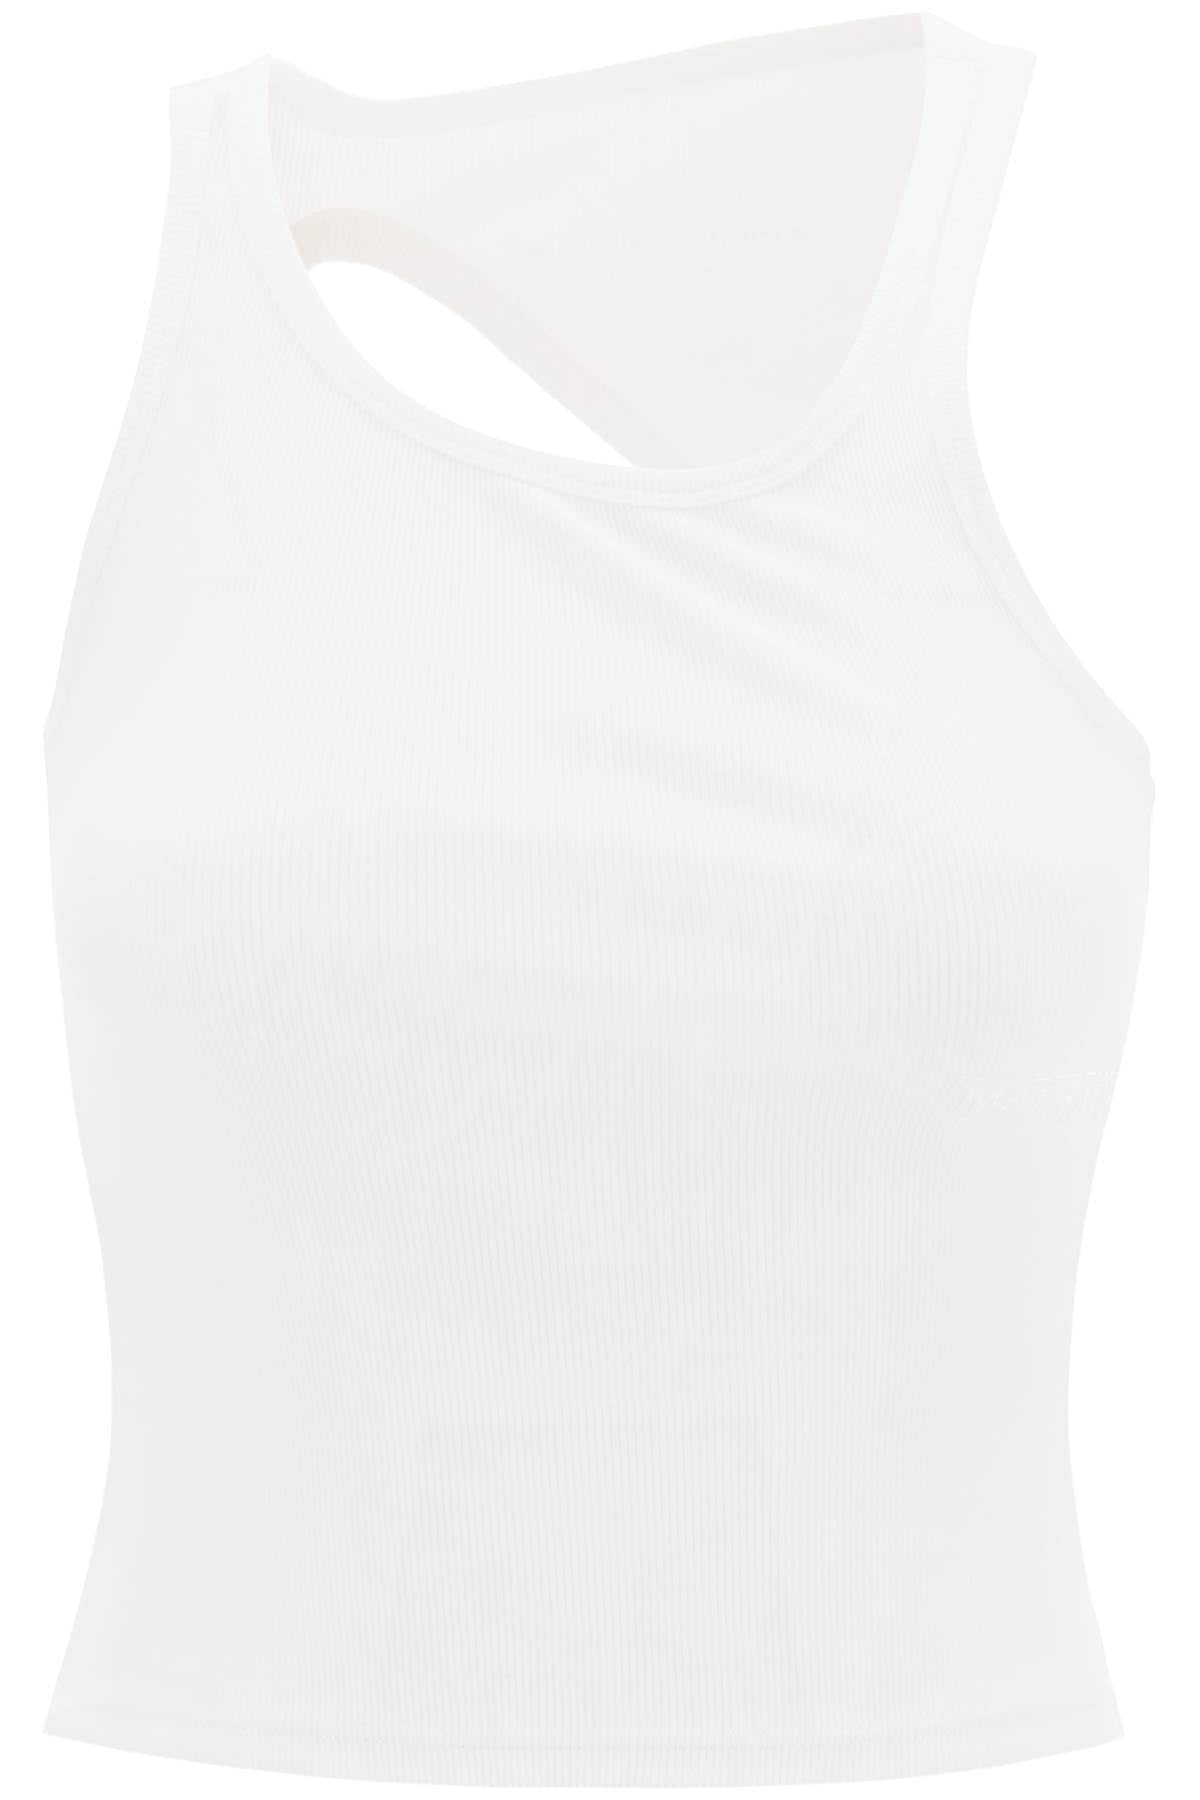 Mm6 maison margiela sleeveless top with back cut-0